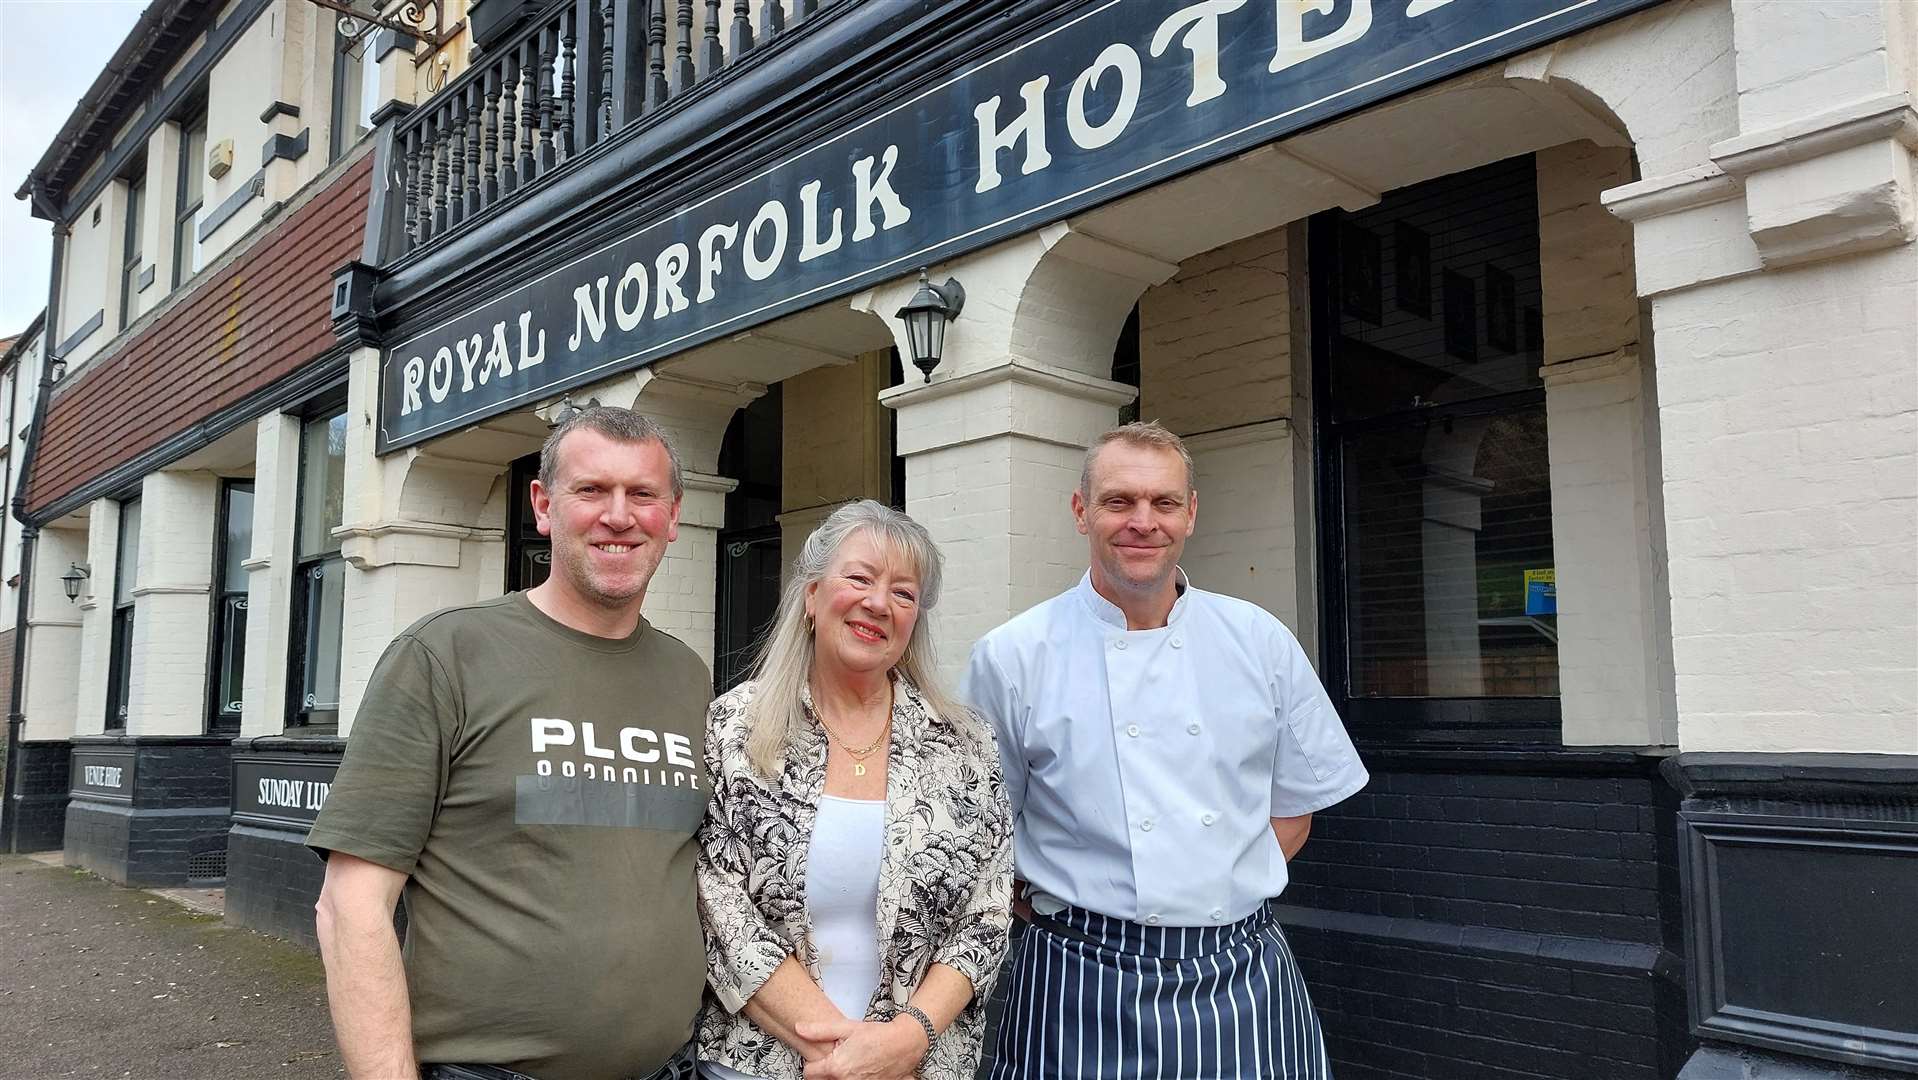 Darren Morgan, Debbie Playford, and Bill Burles have taken over Royal Norfolk Hotel in Sandgate